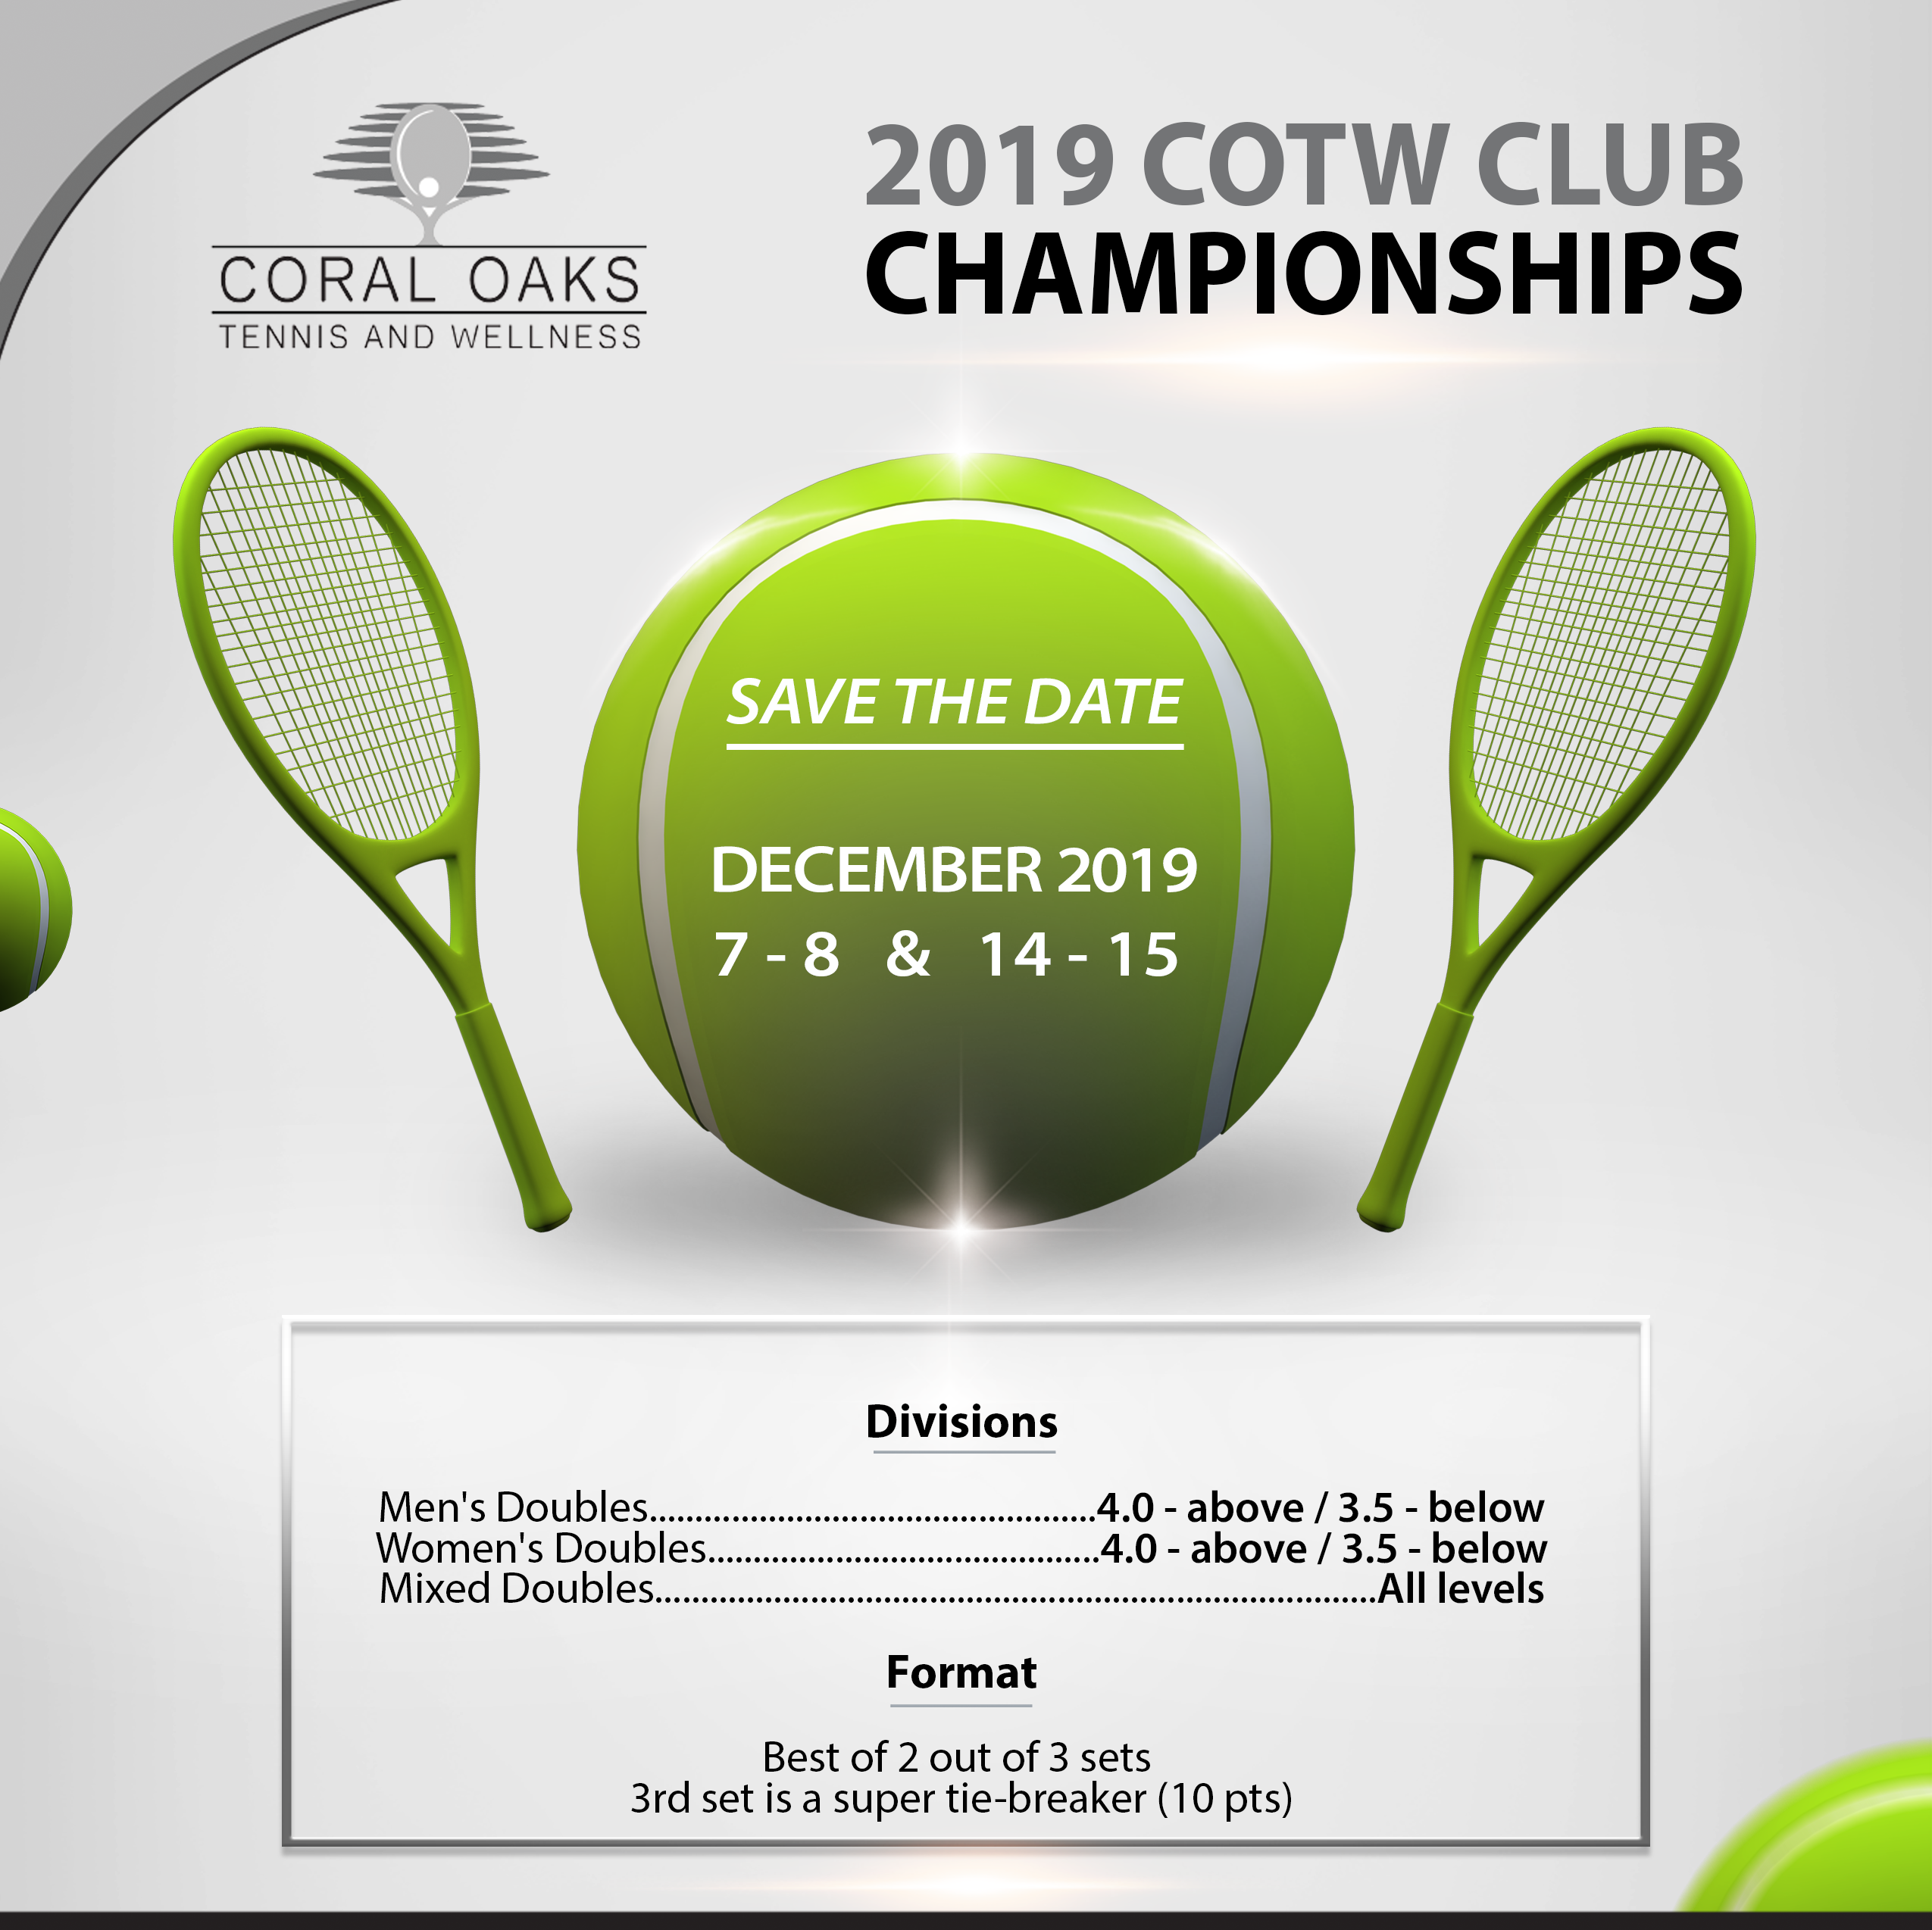 COTW Club Championships